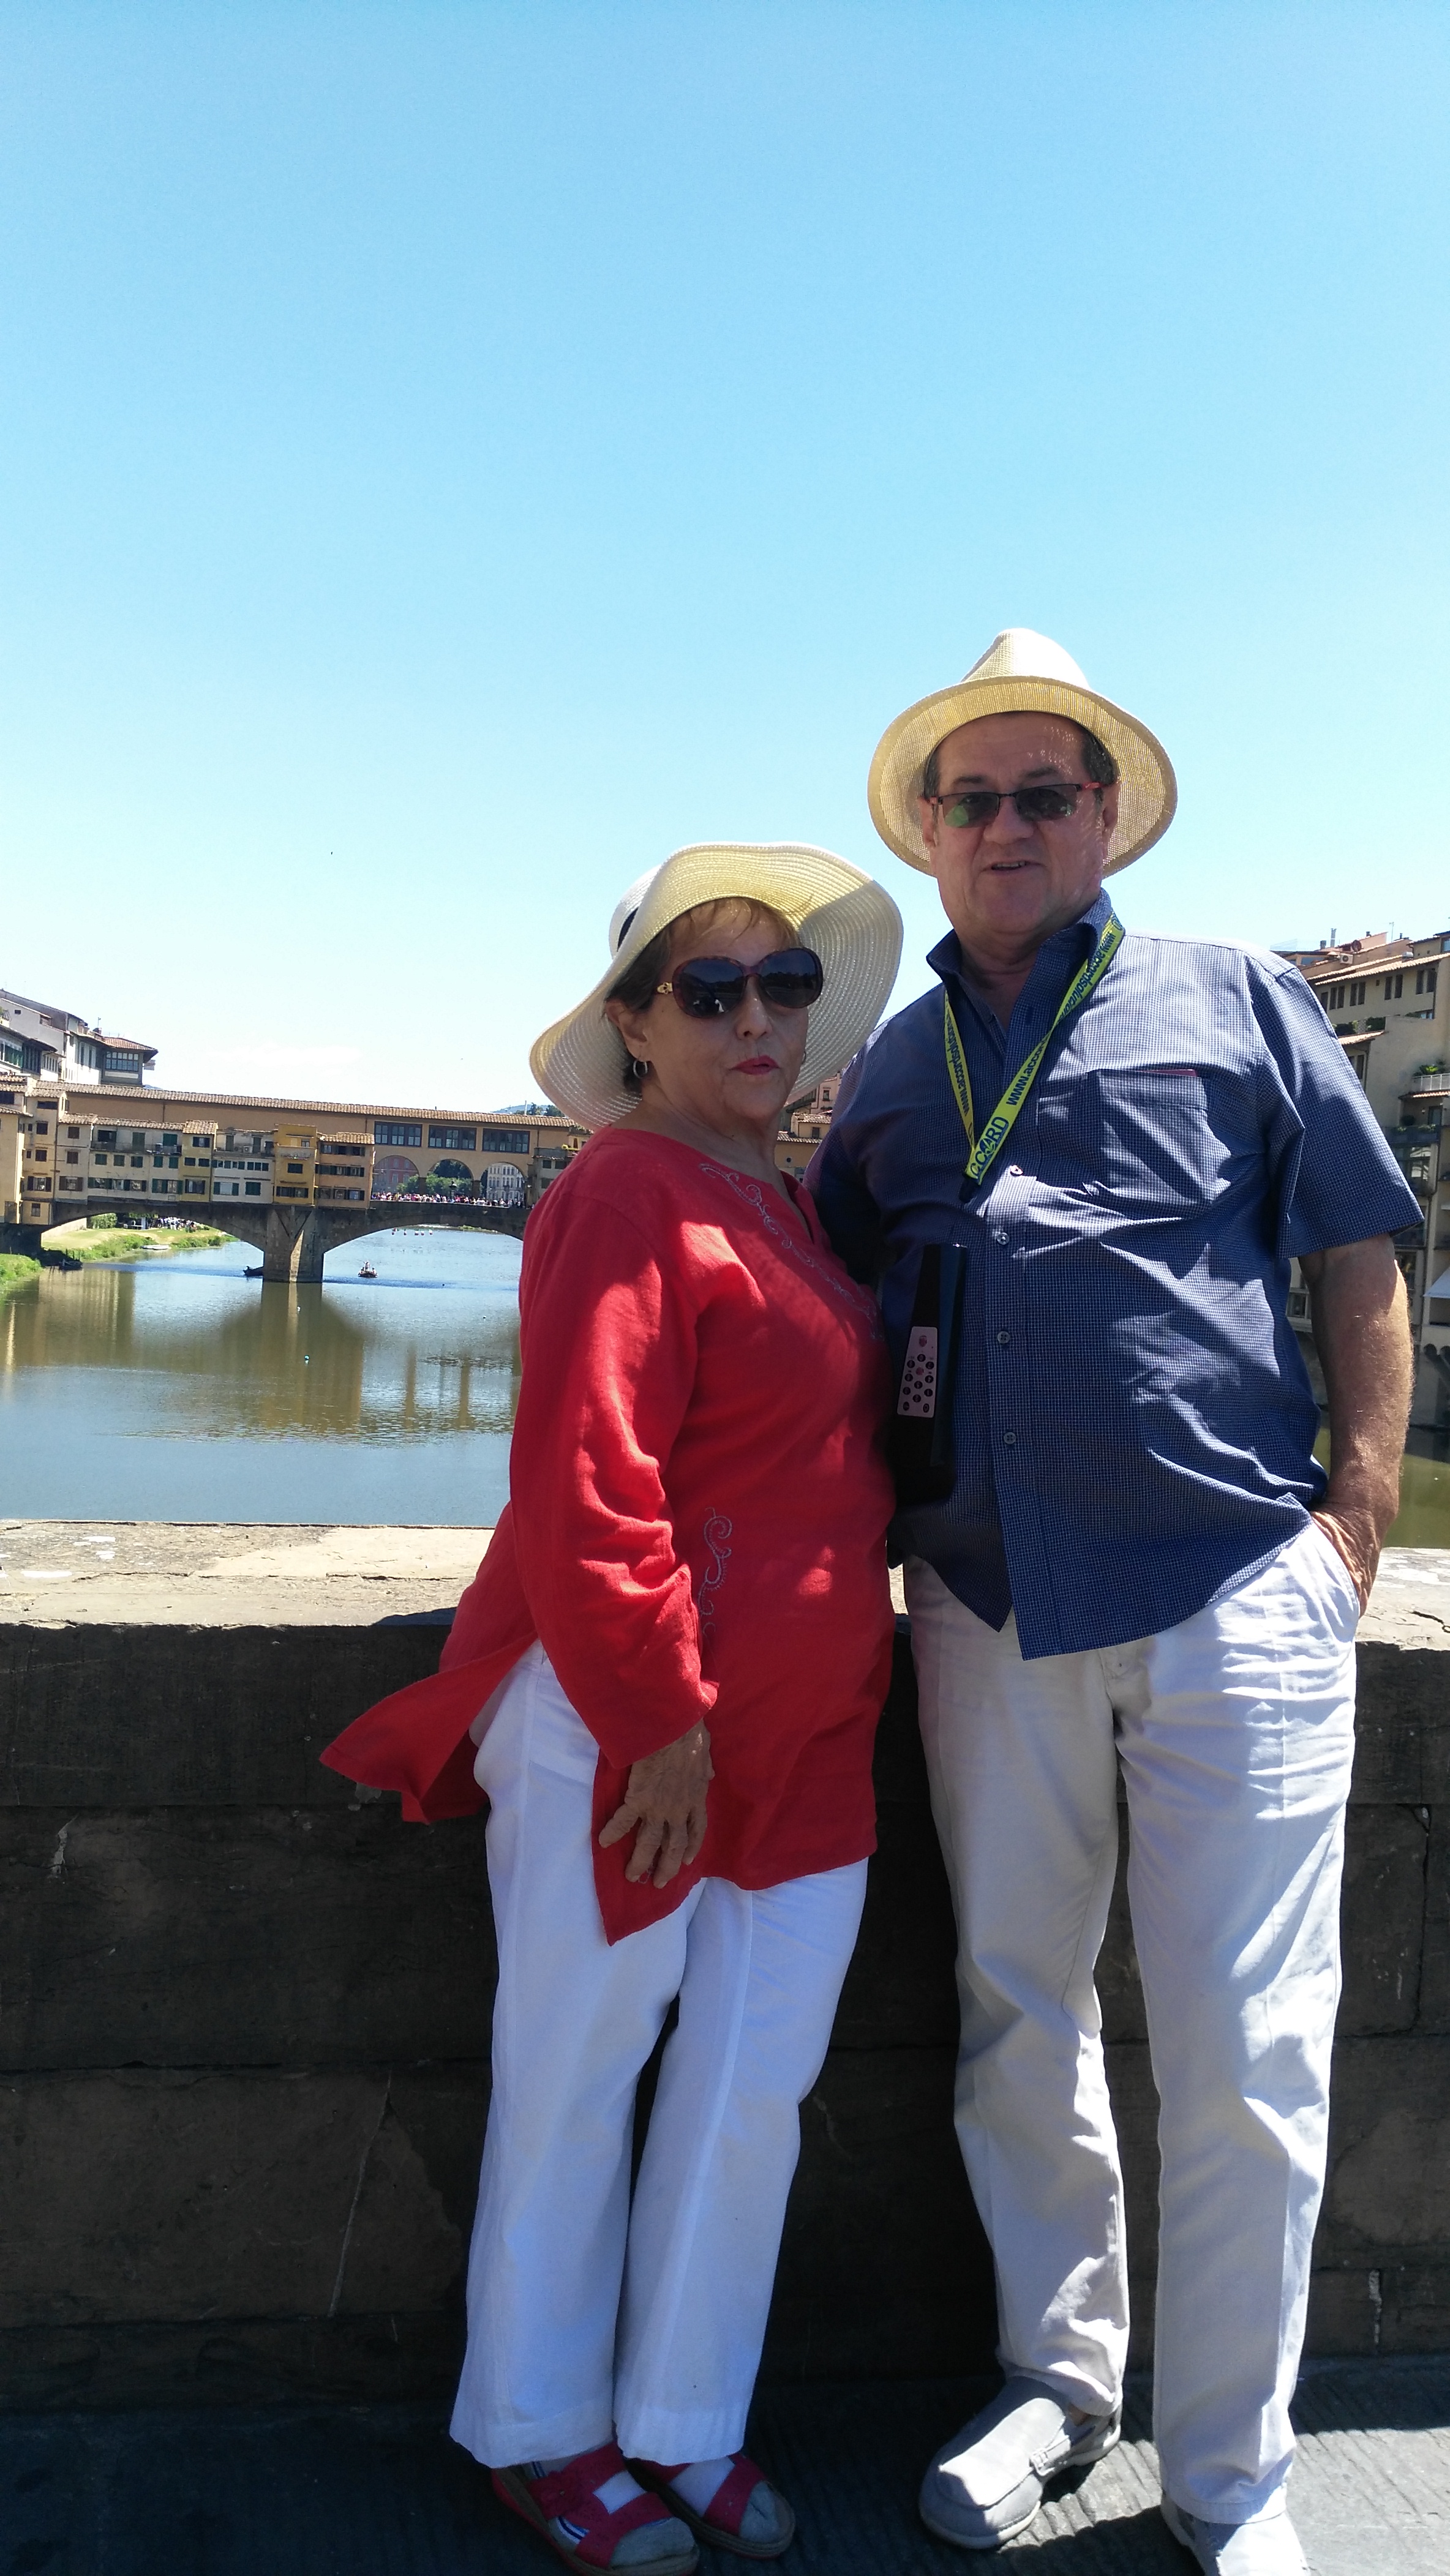 ponte-vecchio-in-florence-italy